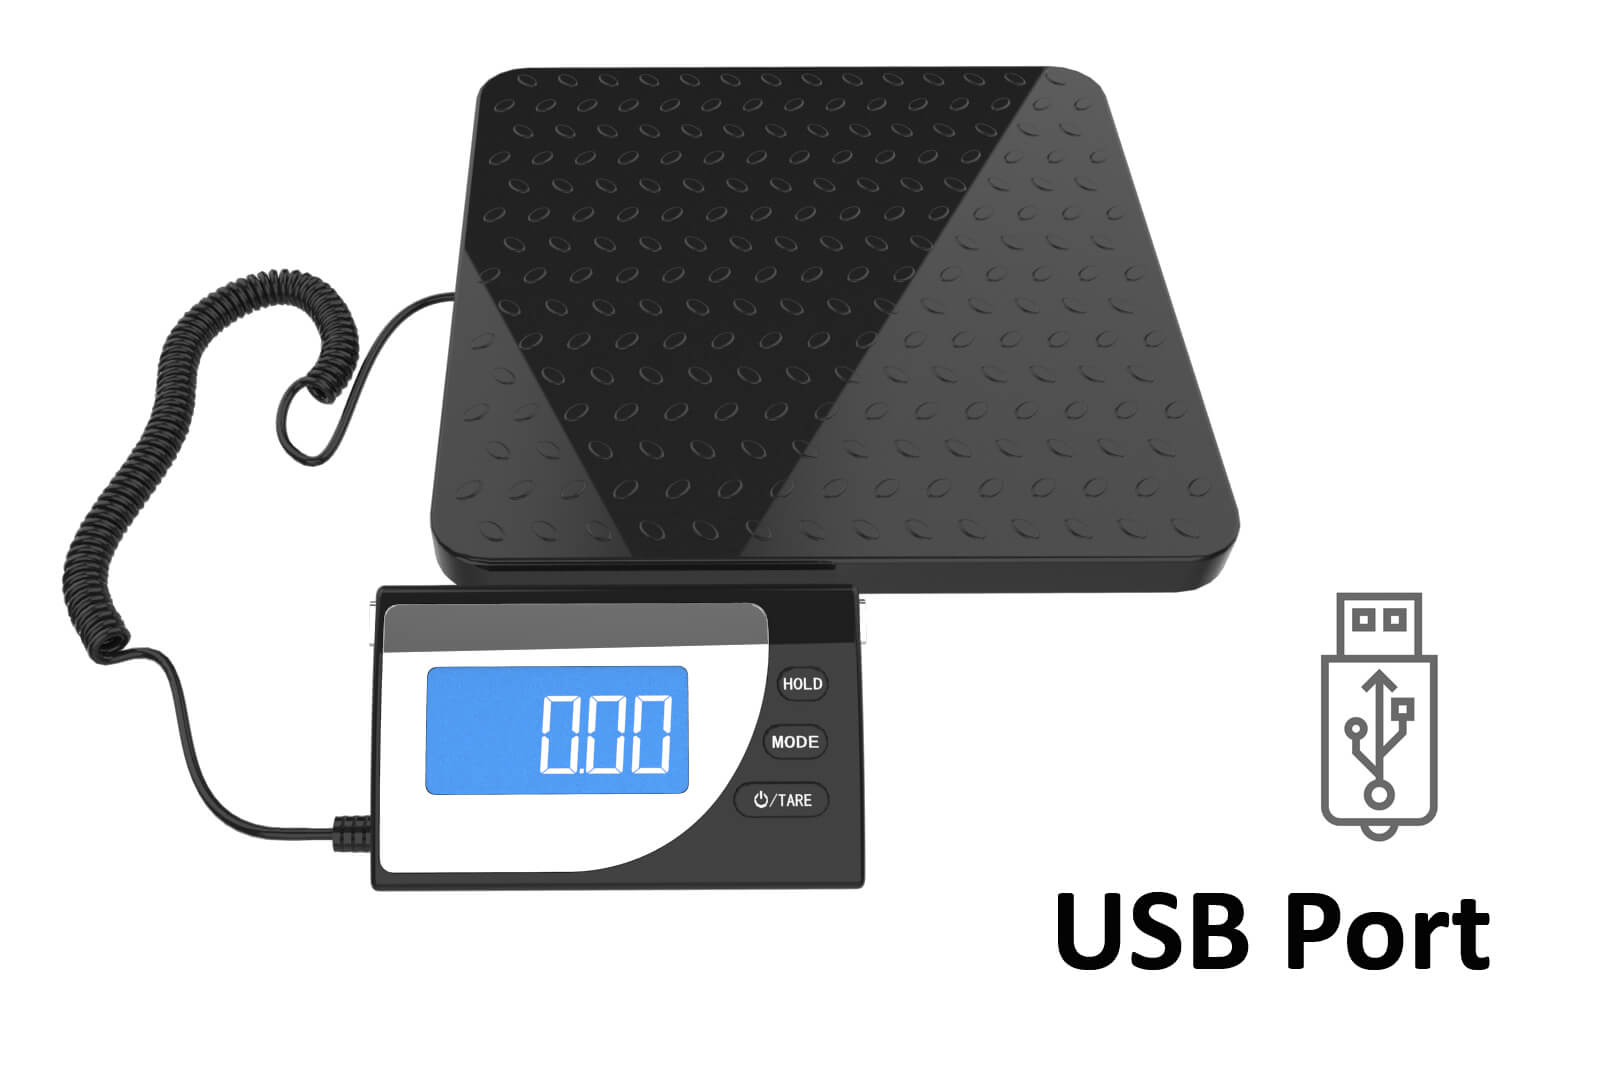 Suofei SF-884 Portable Electronic Diamond Platform Digital PS Postal Scale with USB Port